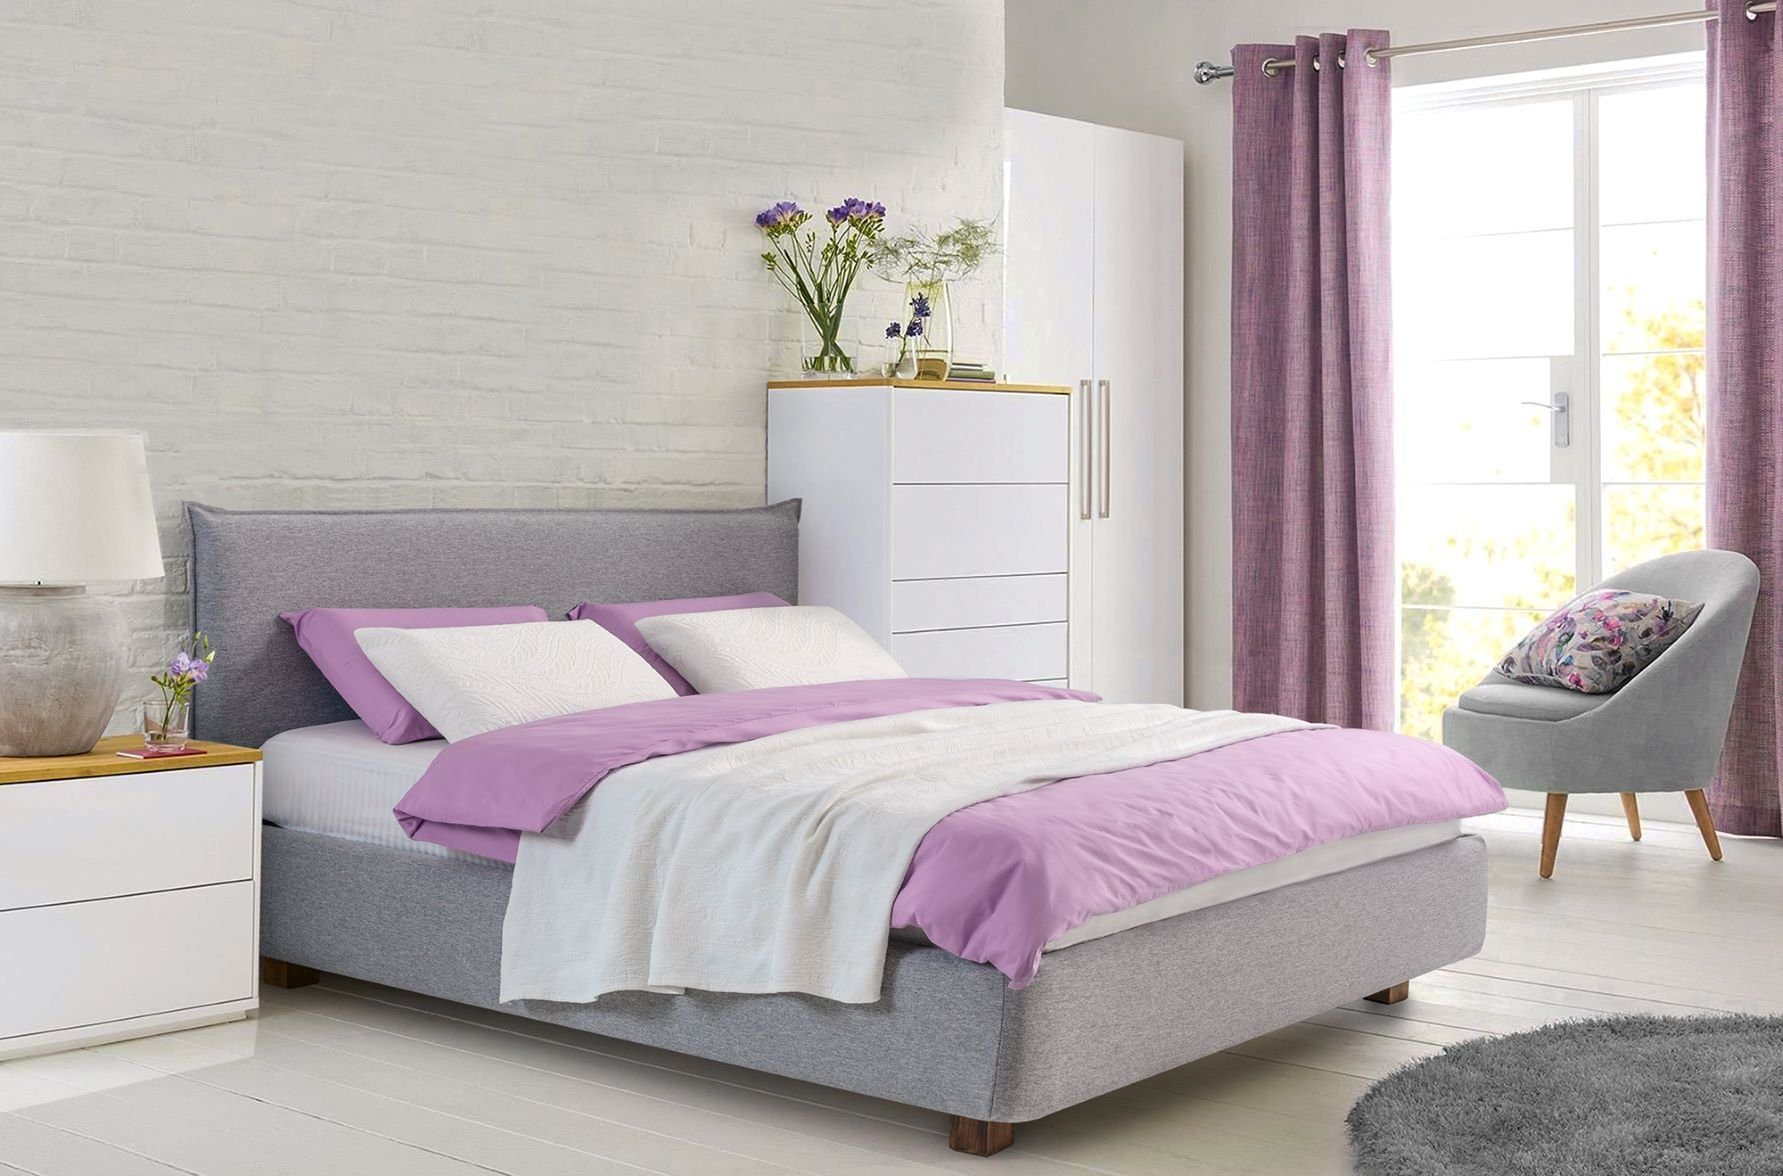 Letti Moderni Sand Plüsch Massivholz Bett hergestellt aus Puro, Holzbett hochwertigem